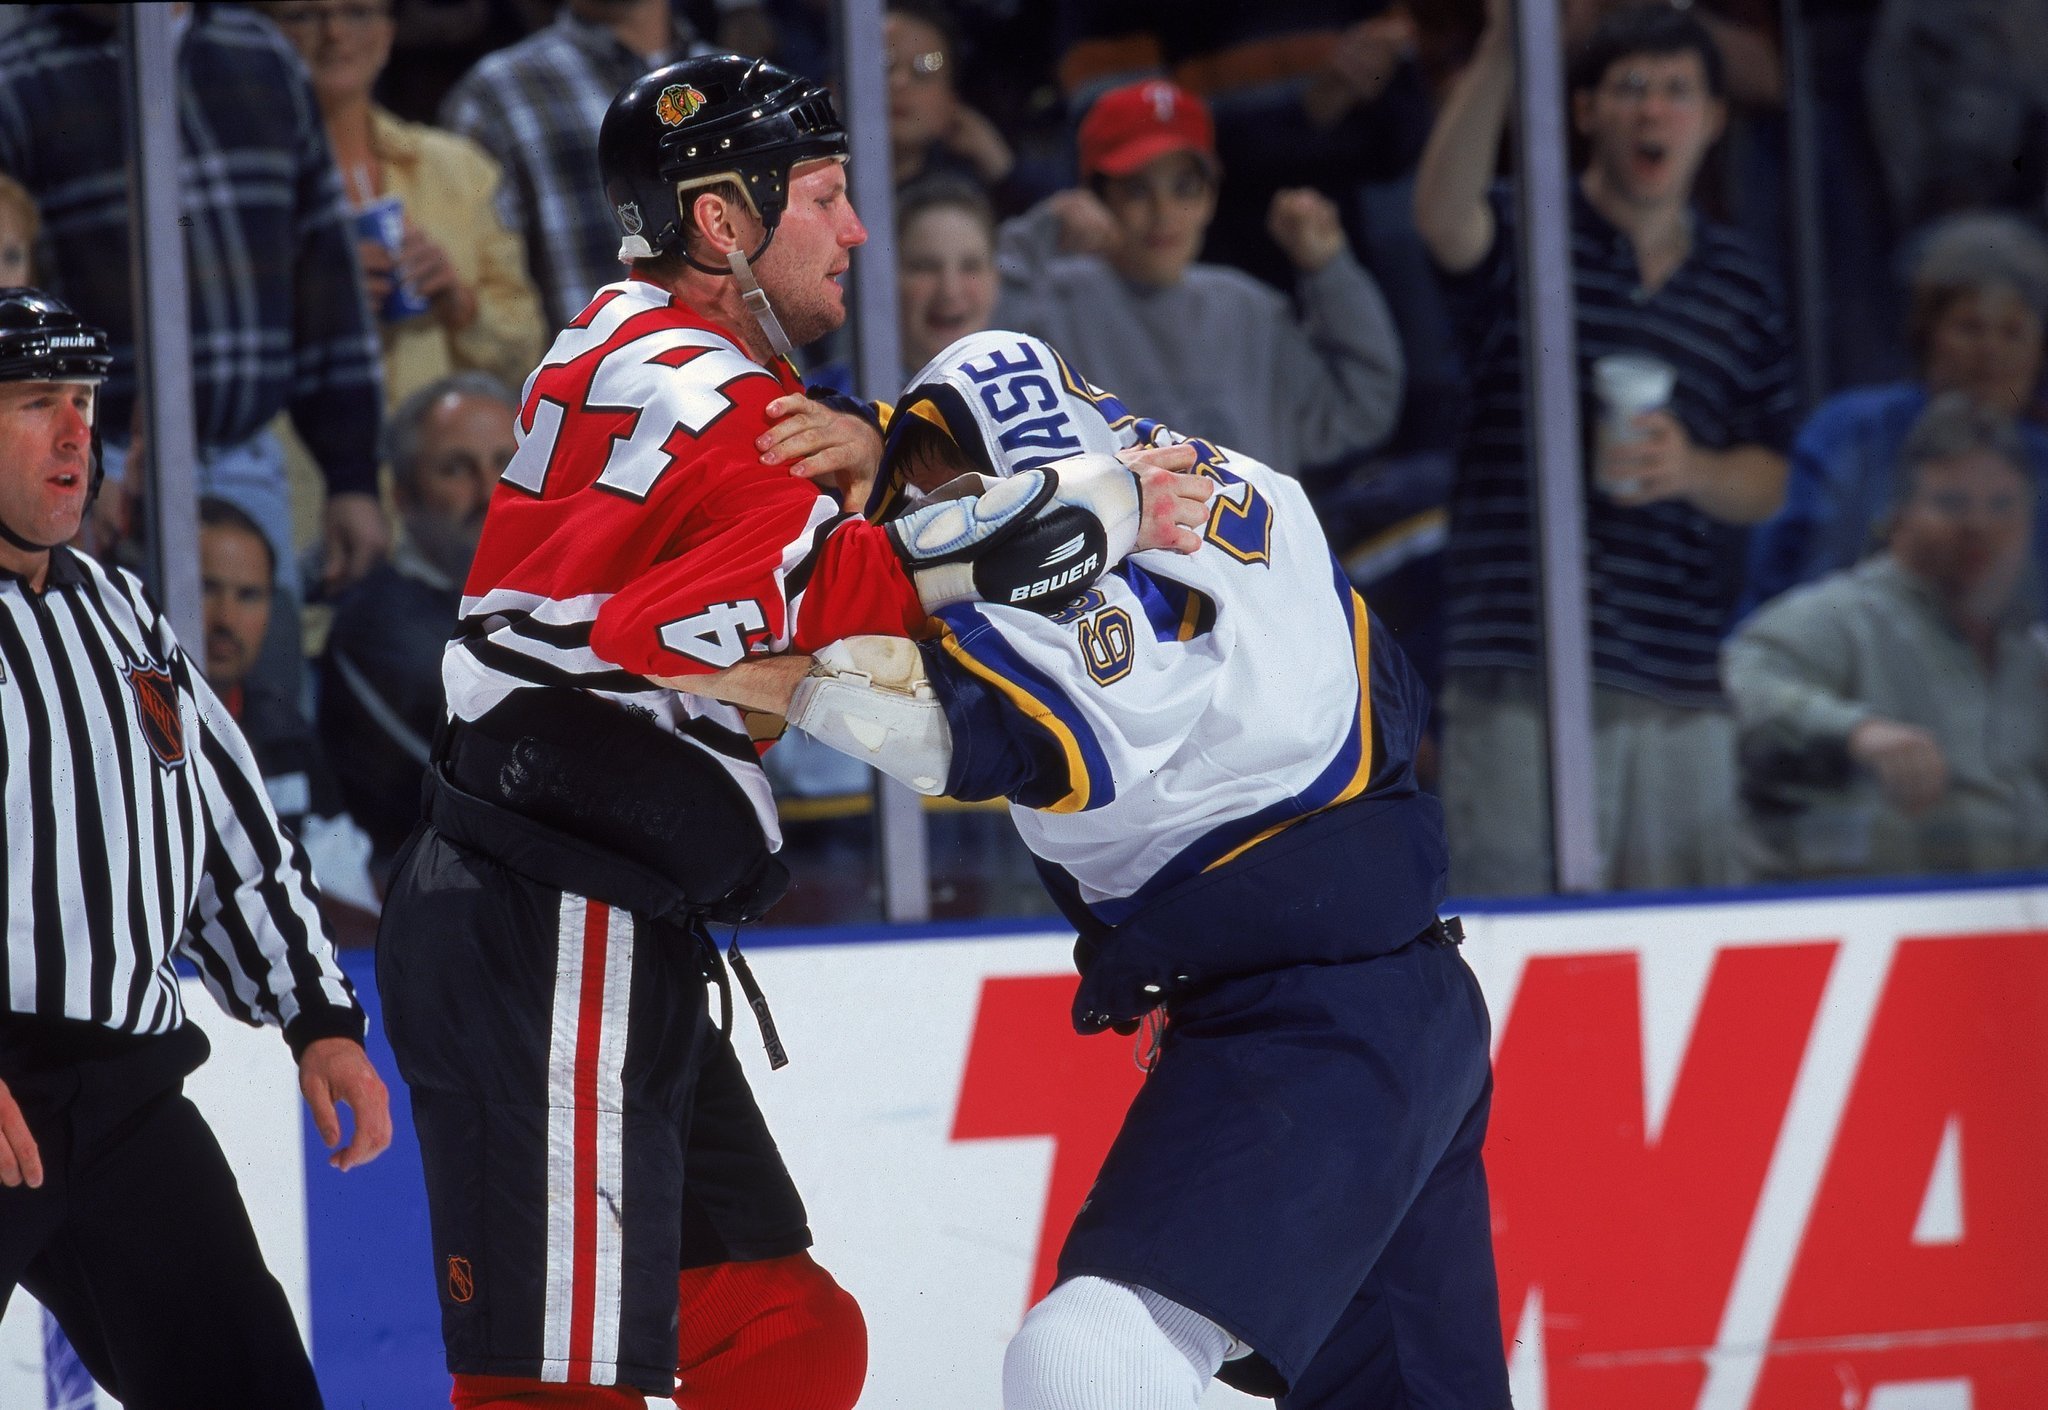 hockey fight jersey over head